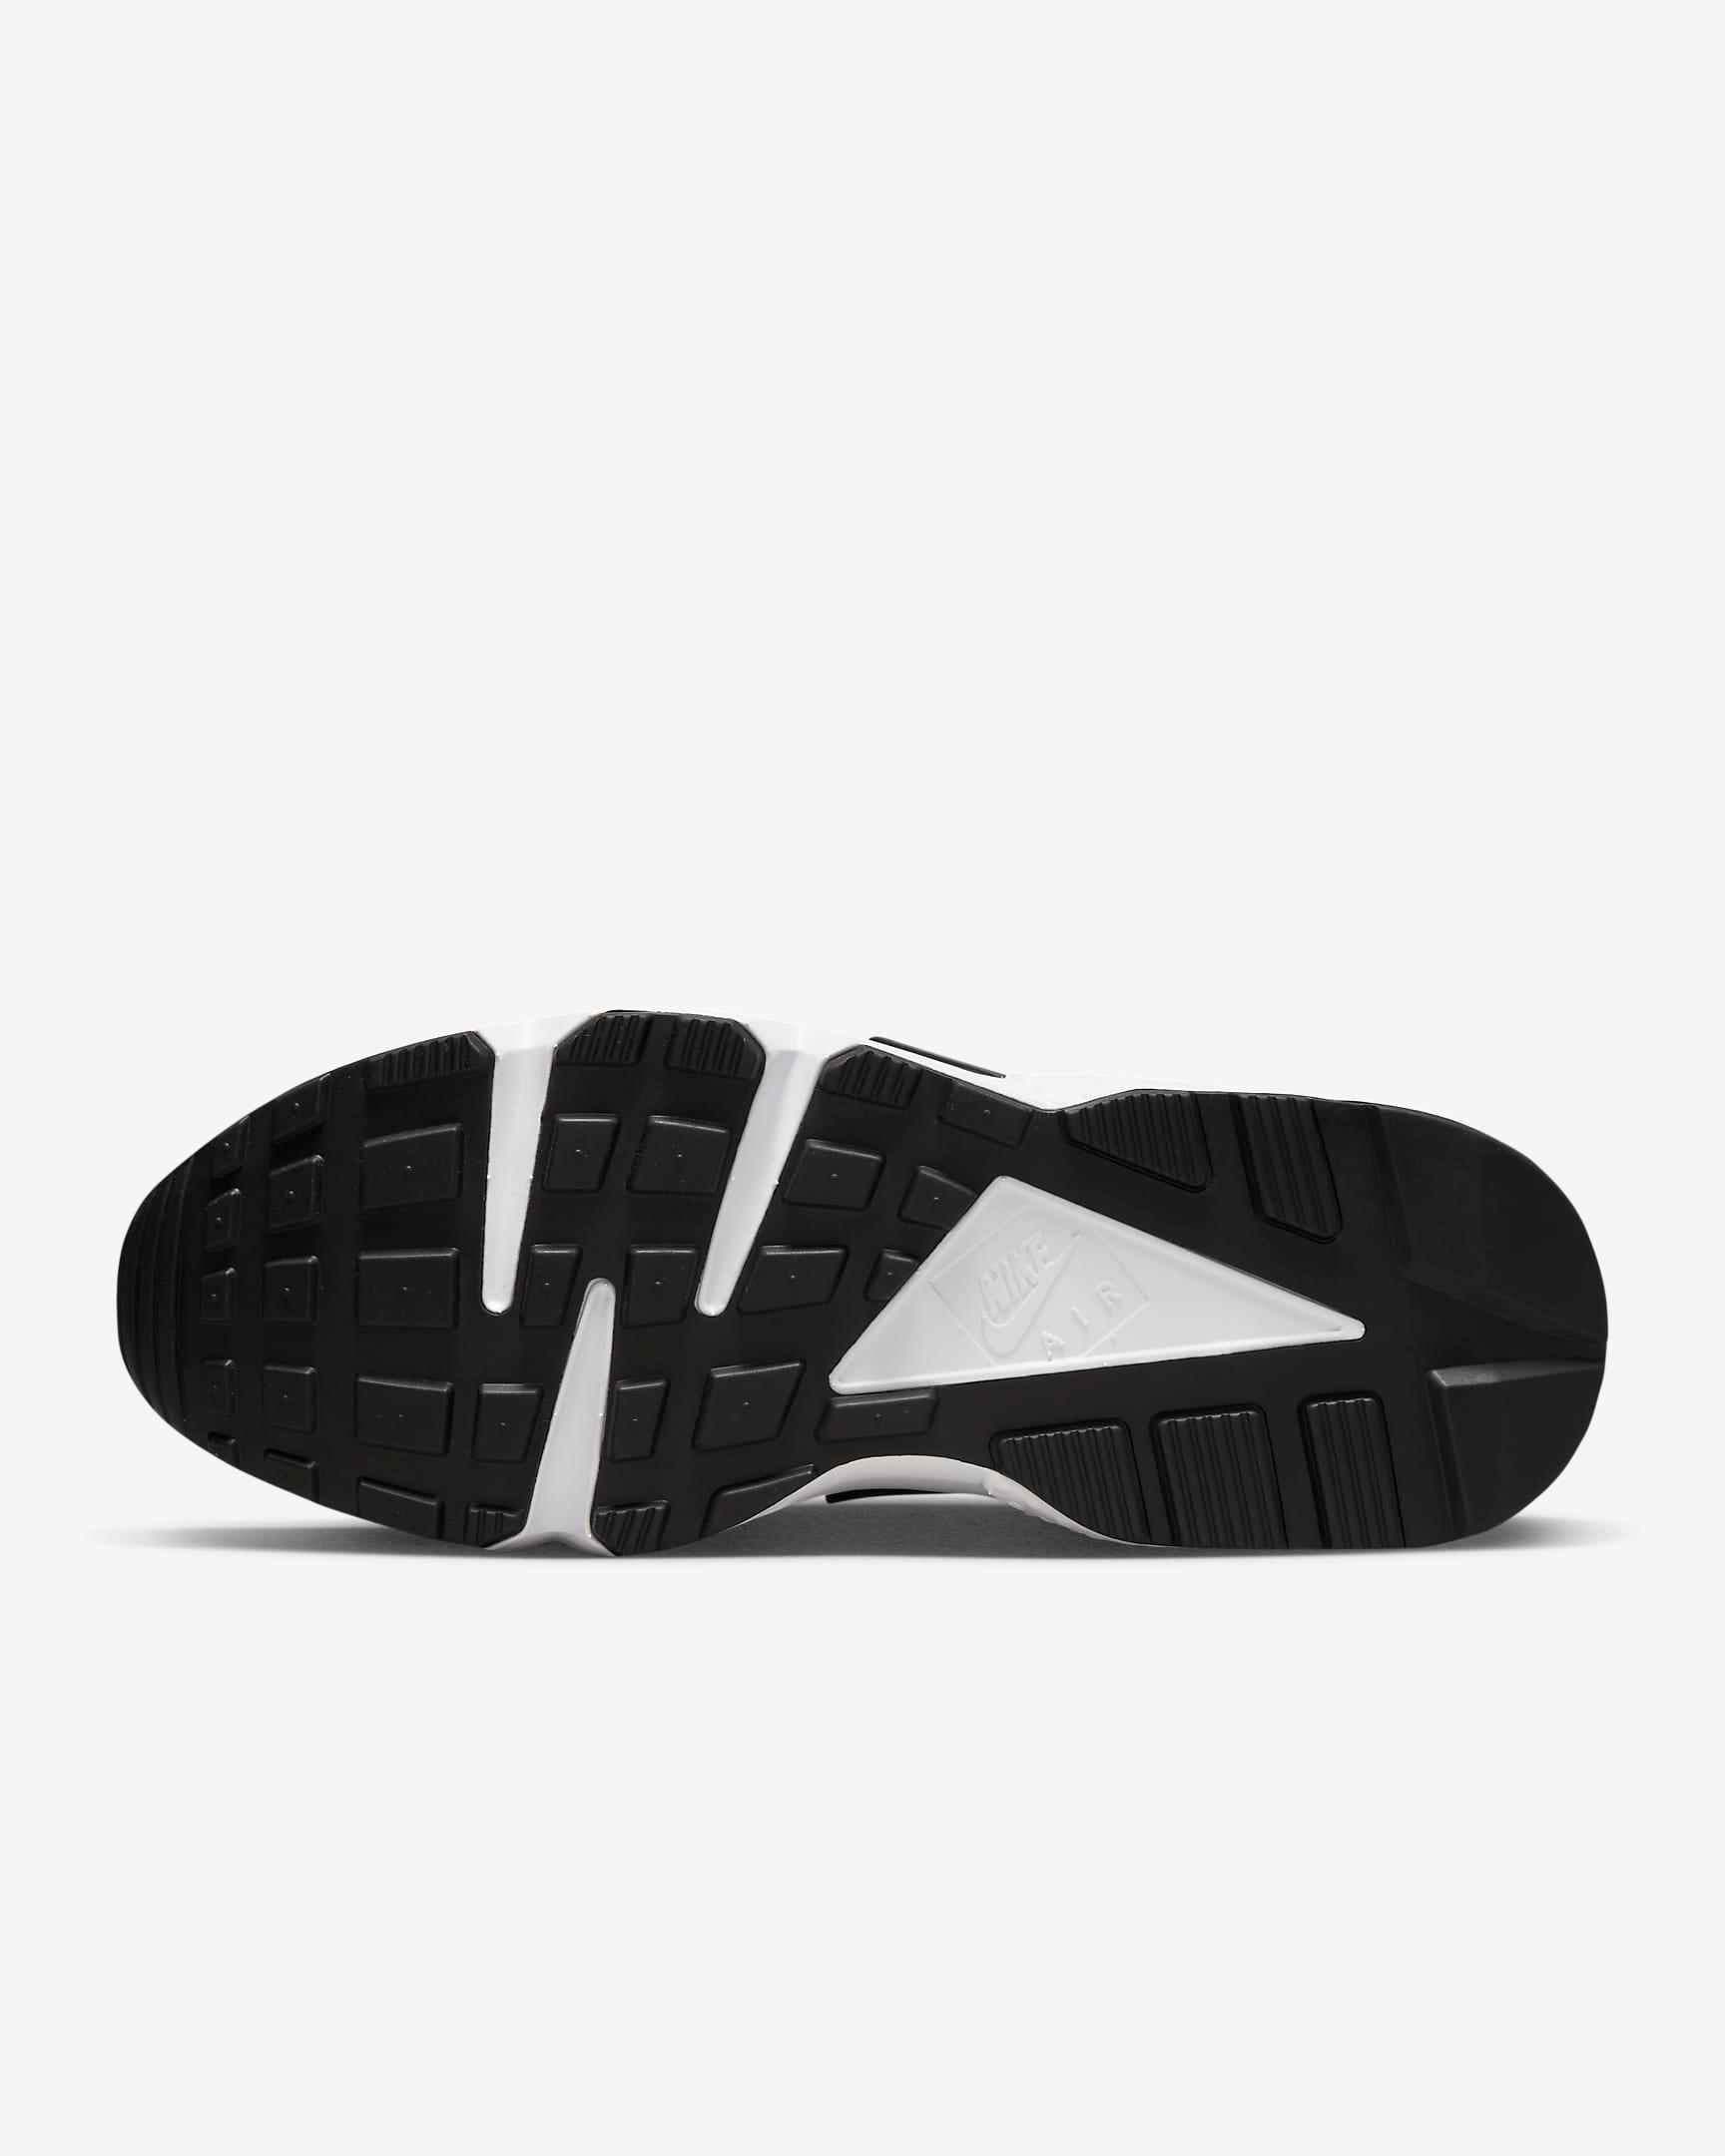 Giày Nike Air Huarache Men Shoes #Neutral Grey - Kallos Vietnam